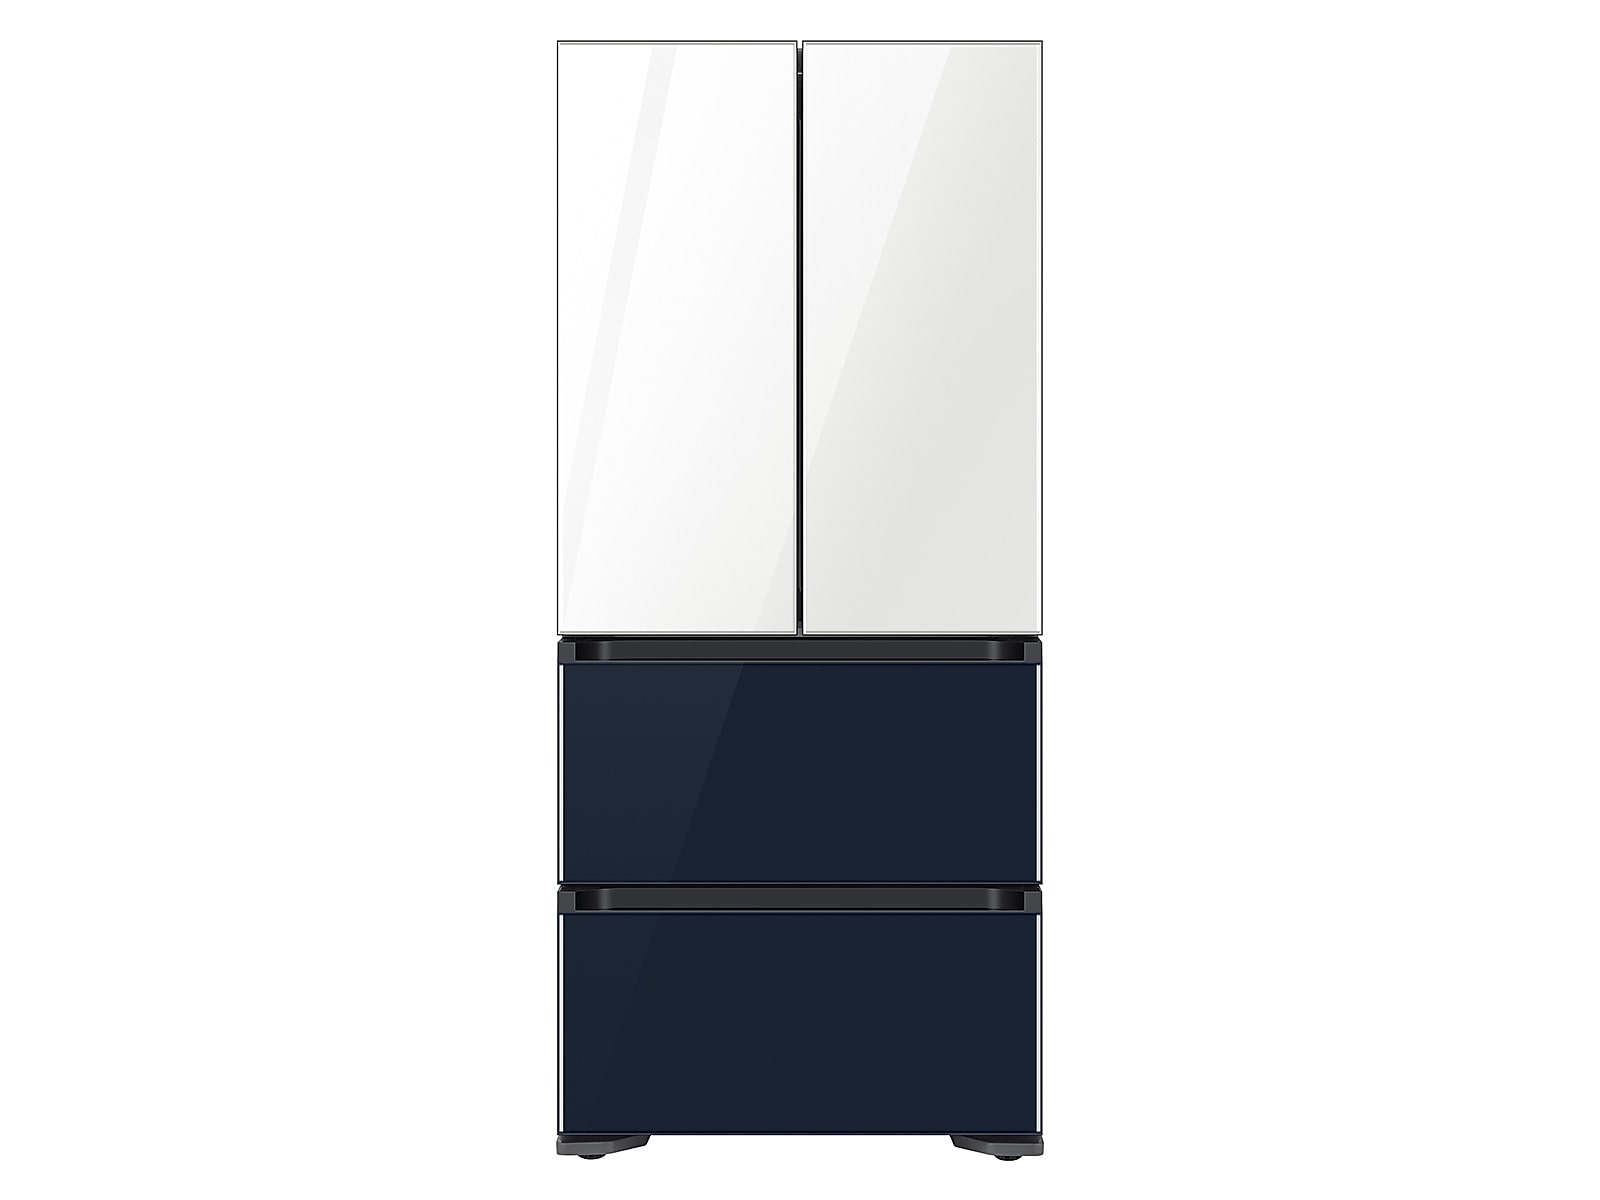 Samsung 17.3 cu. ft. Smart Kimchi & Specialty 4-Door French Door Refrigerator in White-Navy Blue Glass(RQ48T94B277/AA)